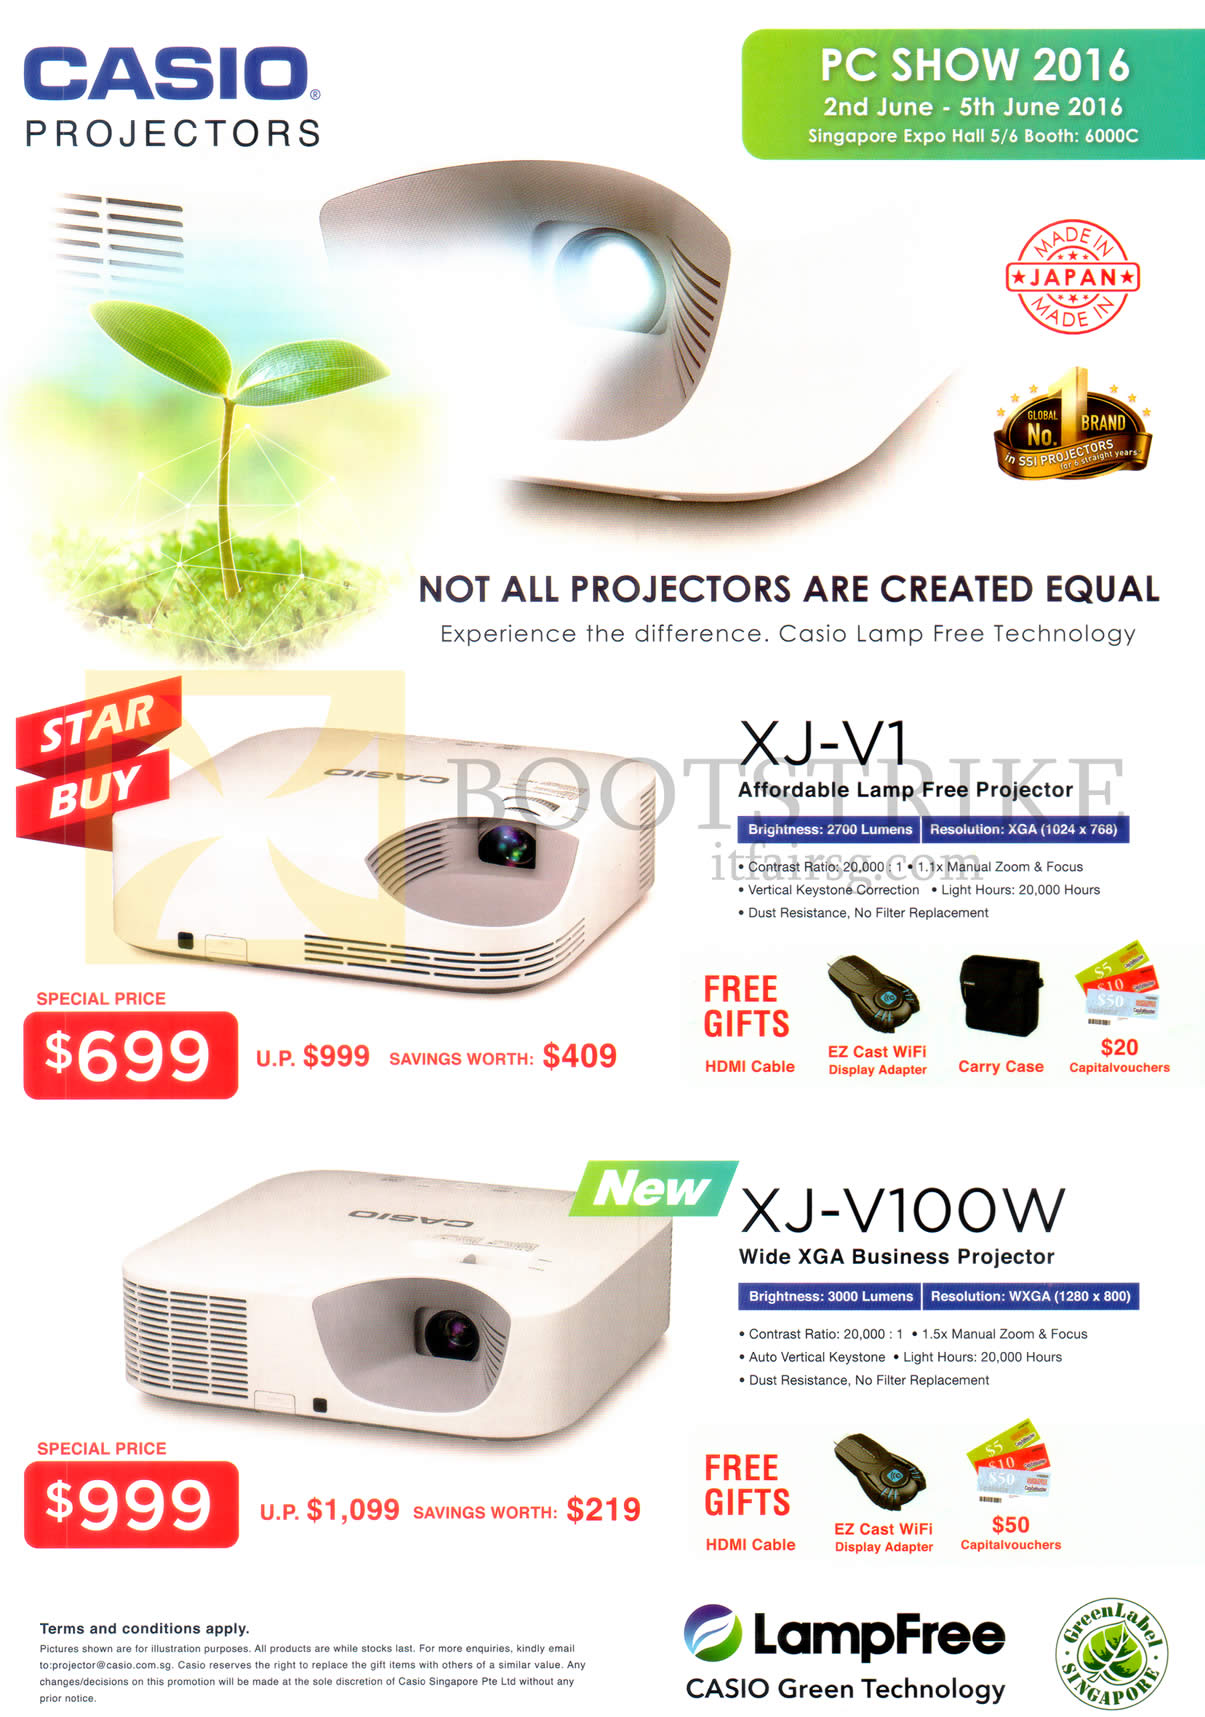 PC SHOW 2016 price list image brochure of Casio Projectors XJ-V1, XJ-V100W